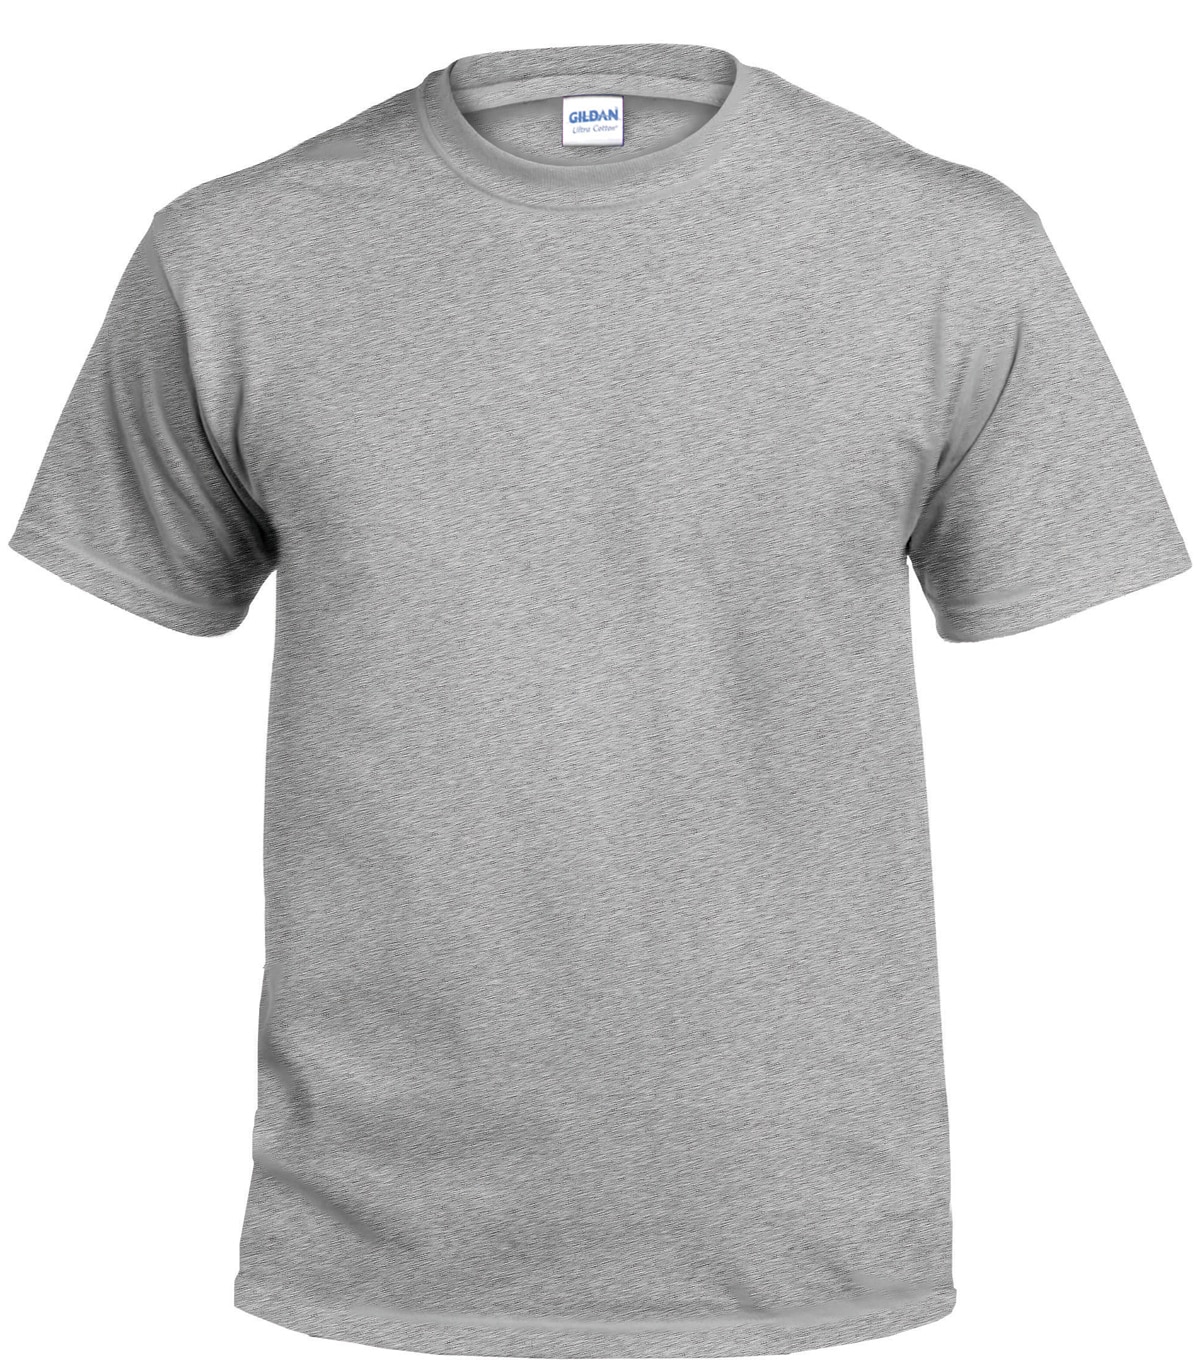 Download Gildan Adult T-shirt X-Large | JOANN